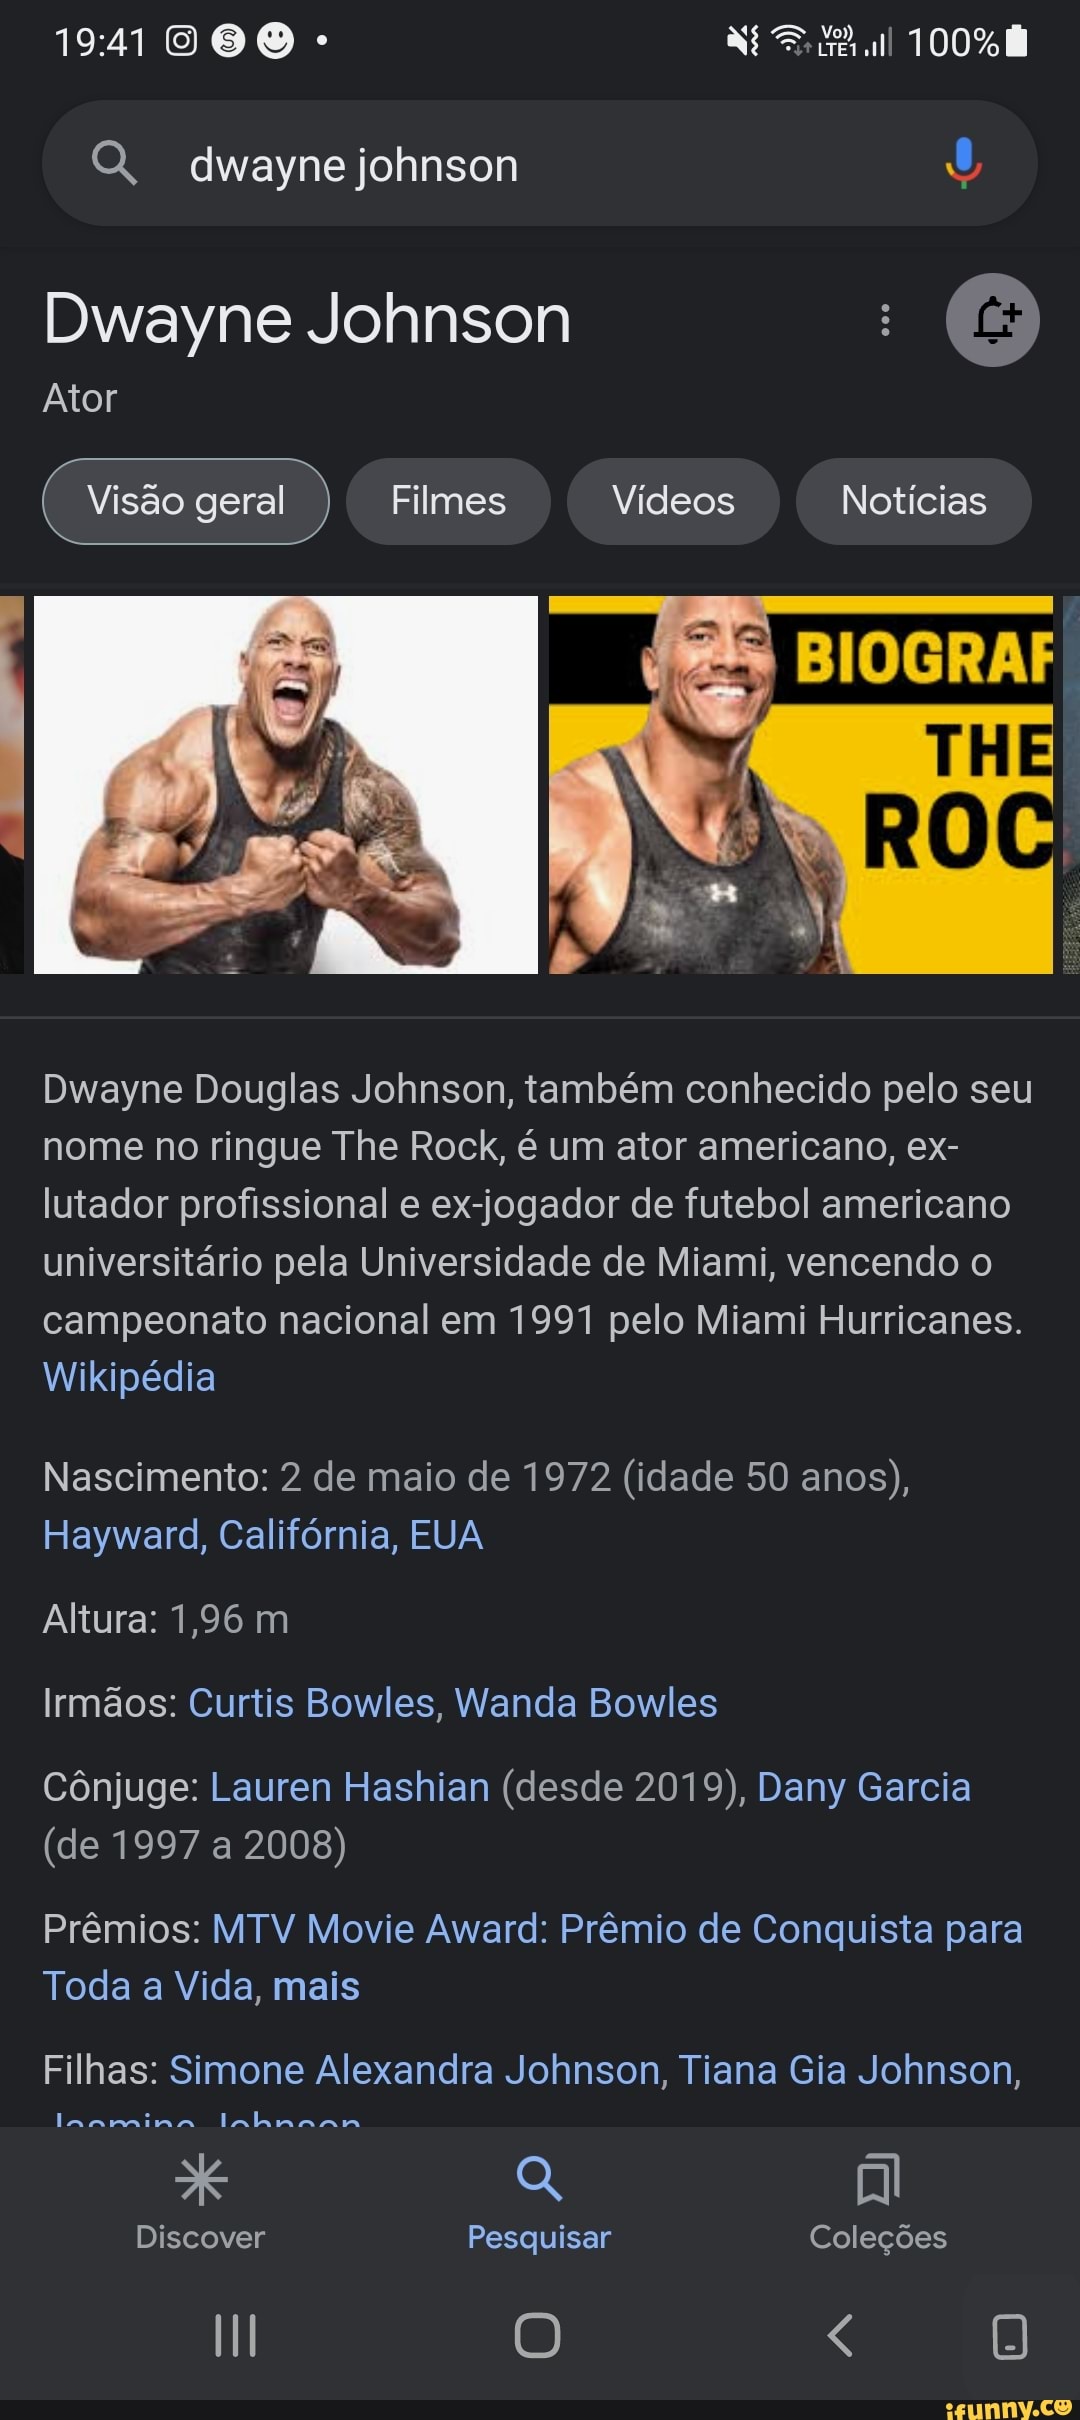 Dwayne The Rock Johnson e seus 50 anos de idade - Aconteceu no